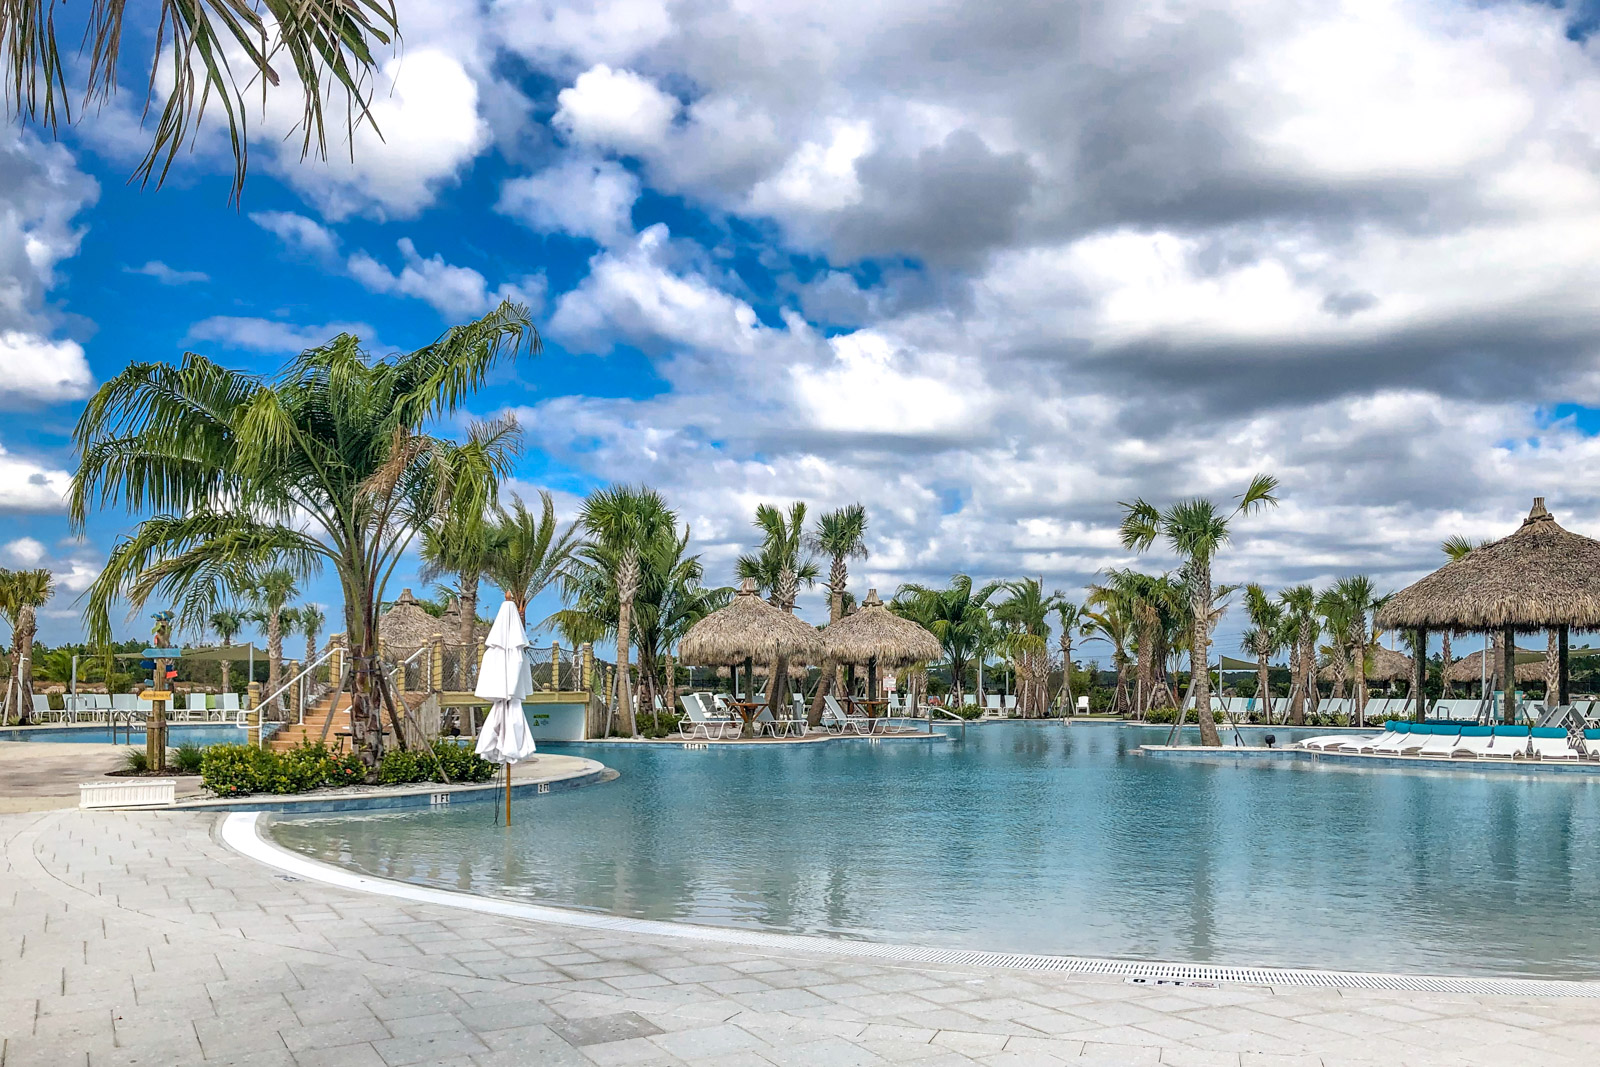 Palm trees and cabanas surrounding the resort-style outdoor pool at Latitude Margaritaville in Daytona Beach, Florida